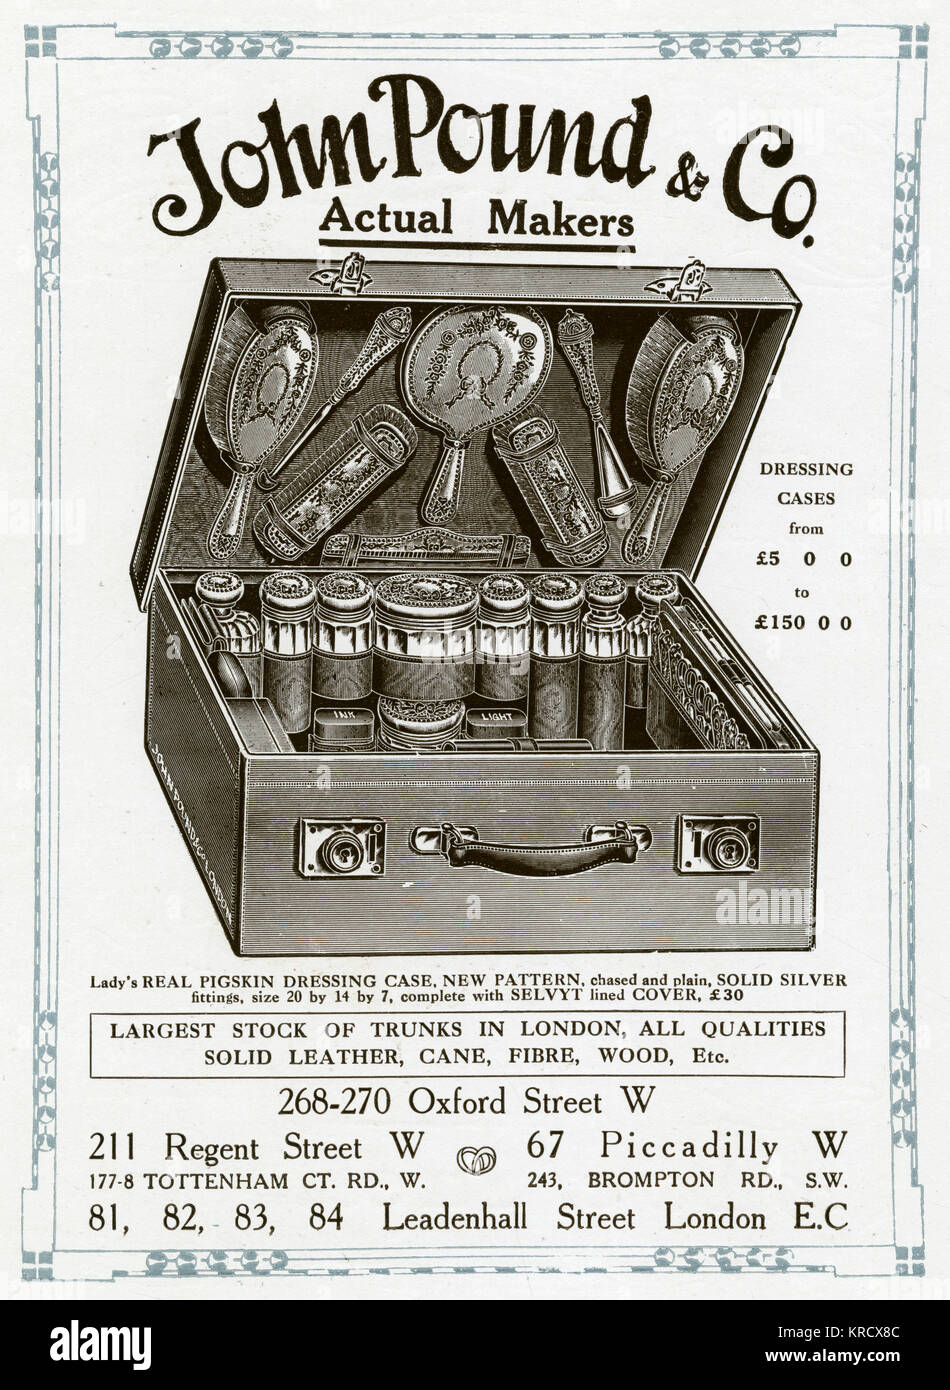 Advert for John Pound & Co dressing case 1912 Stock Photo